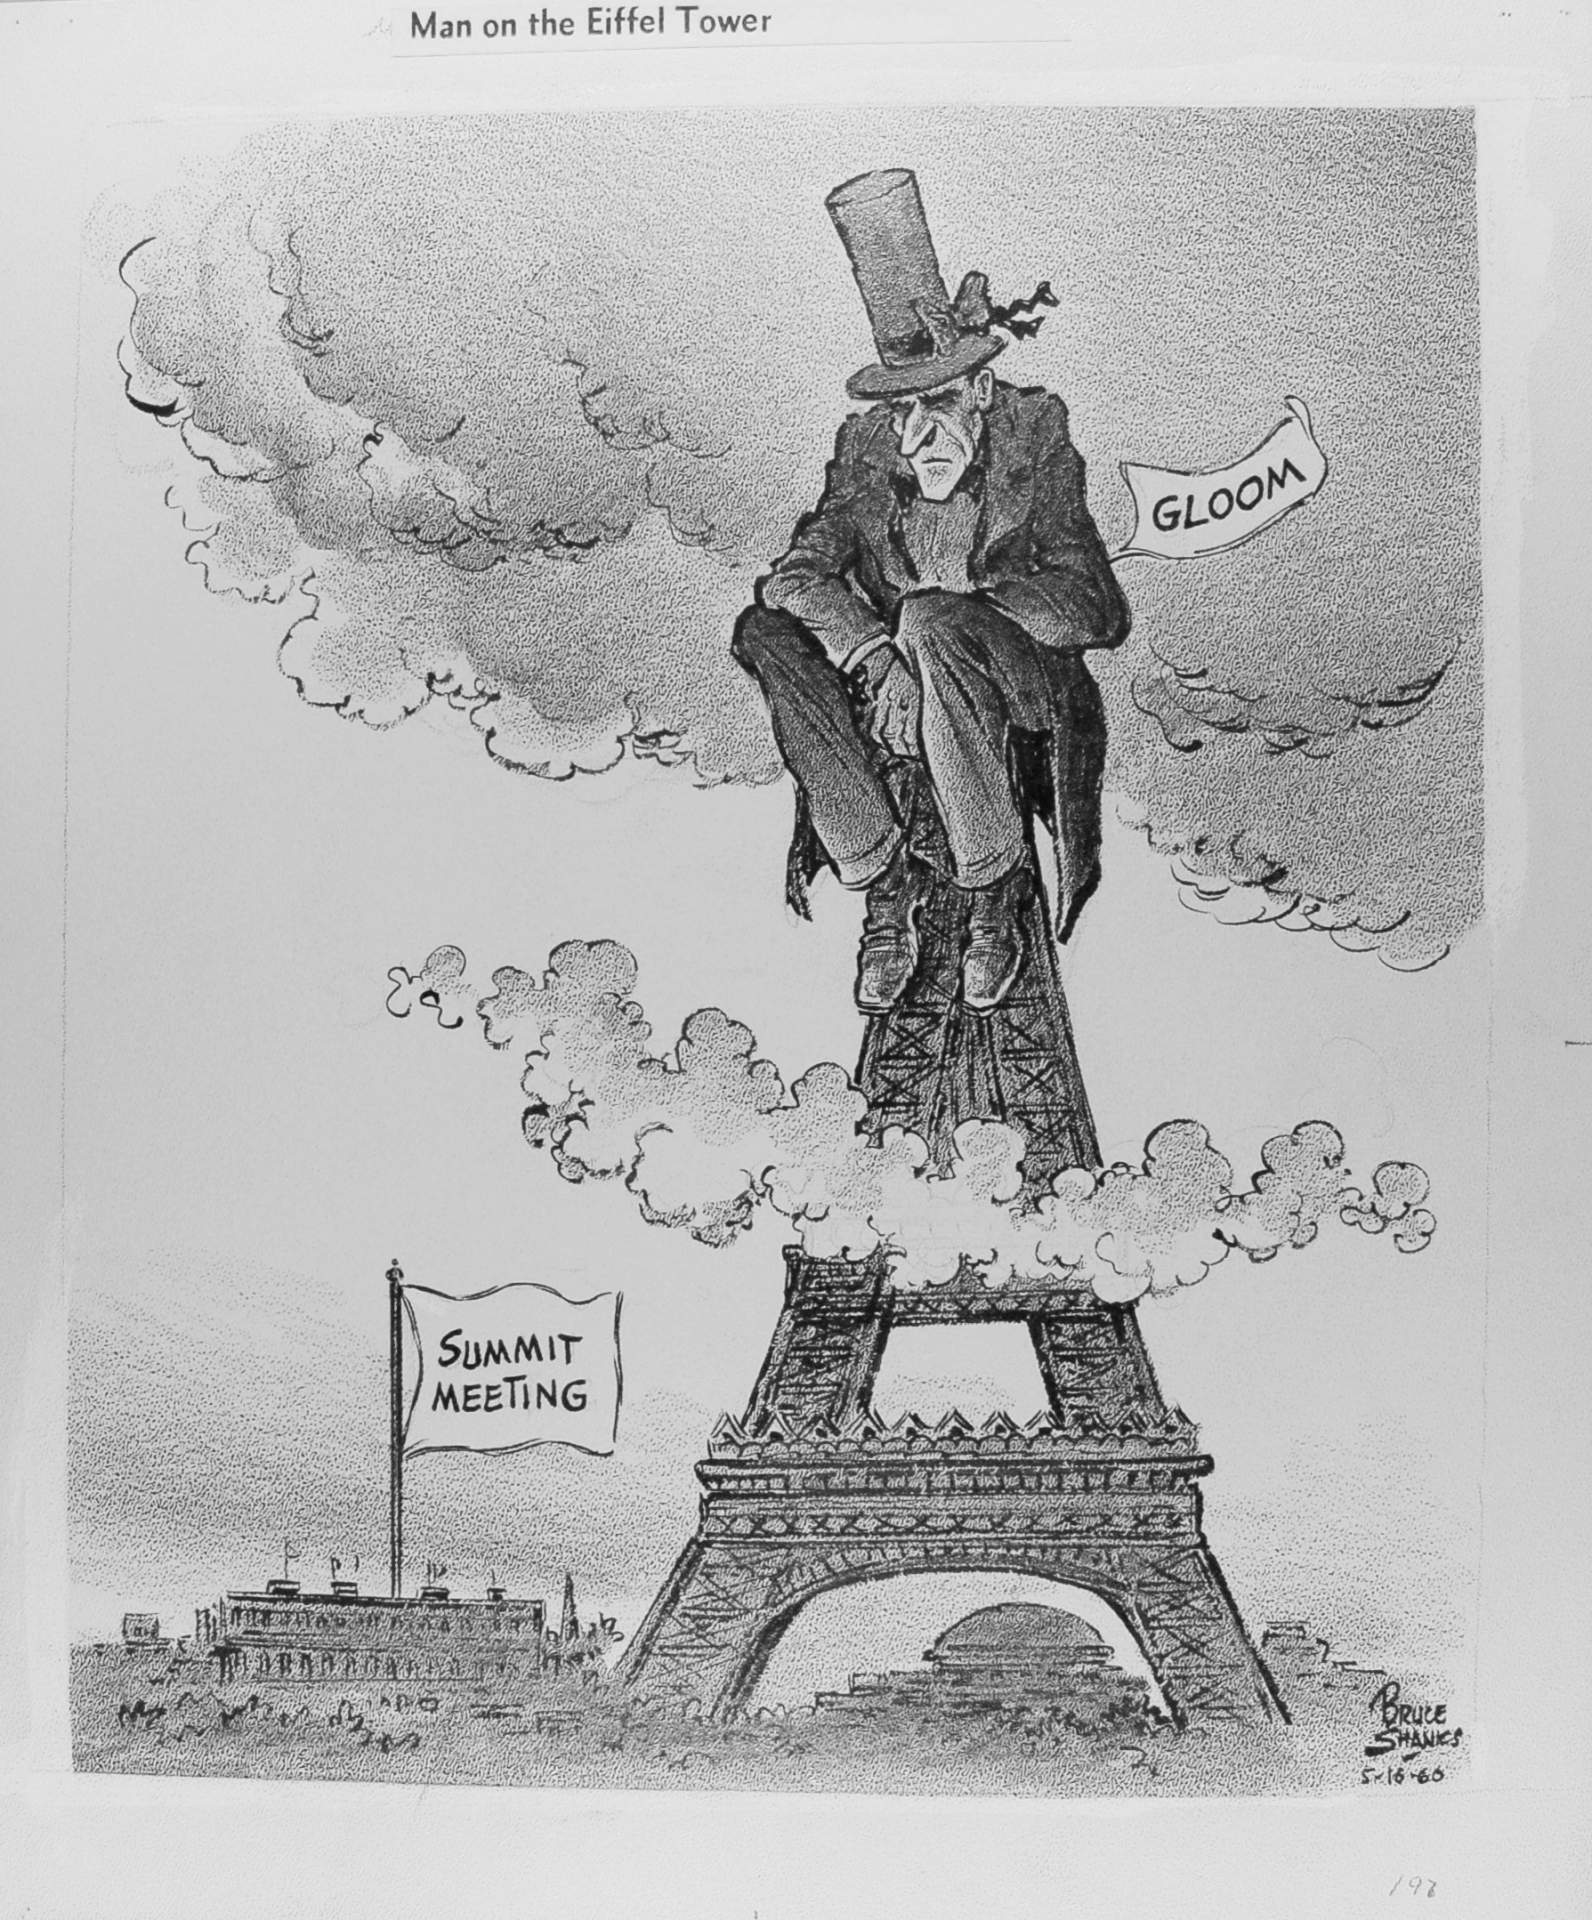 Man on the Eiffel Tower